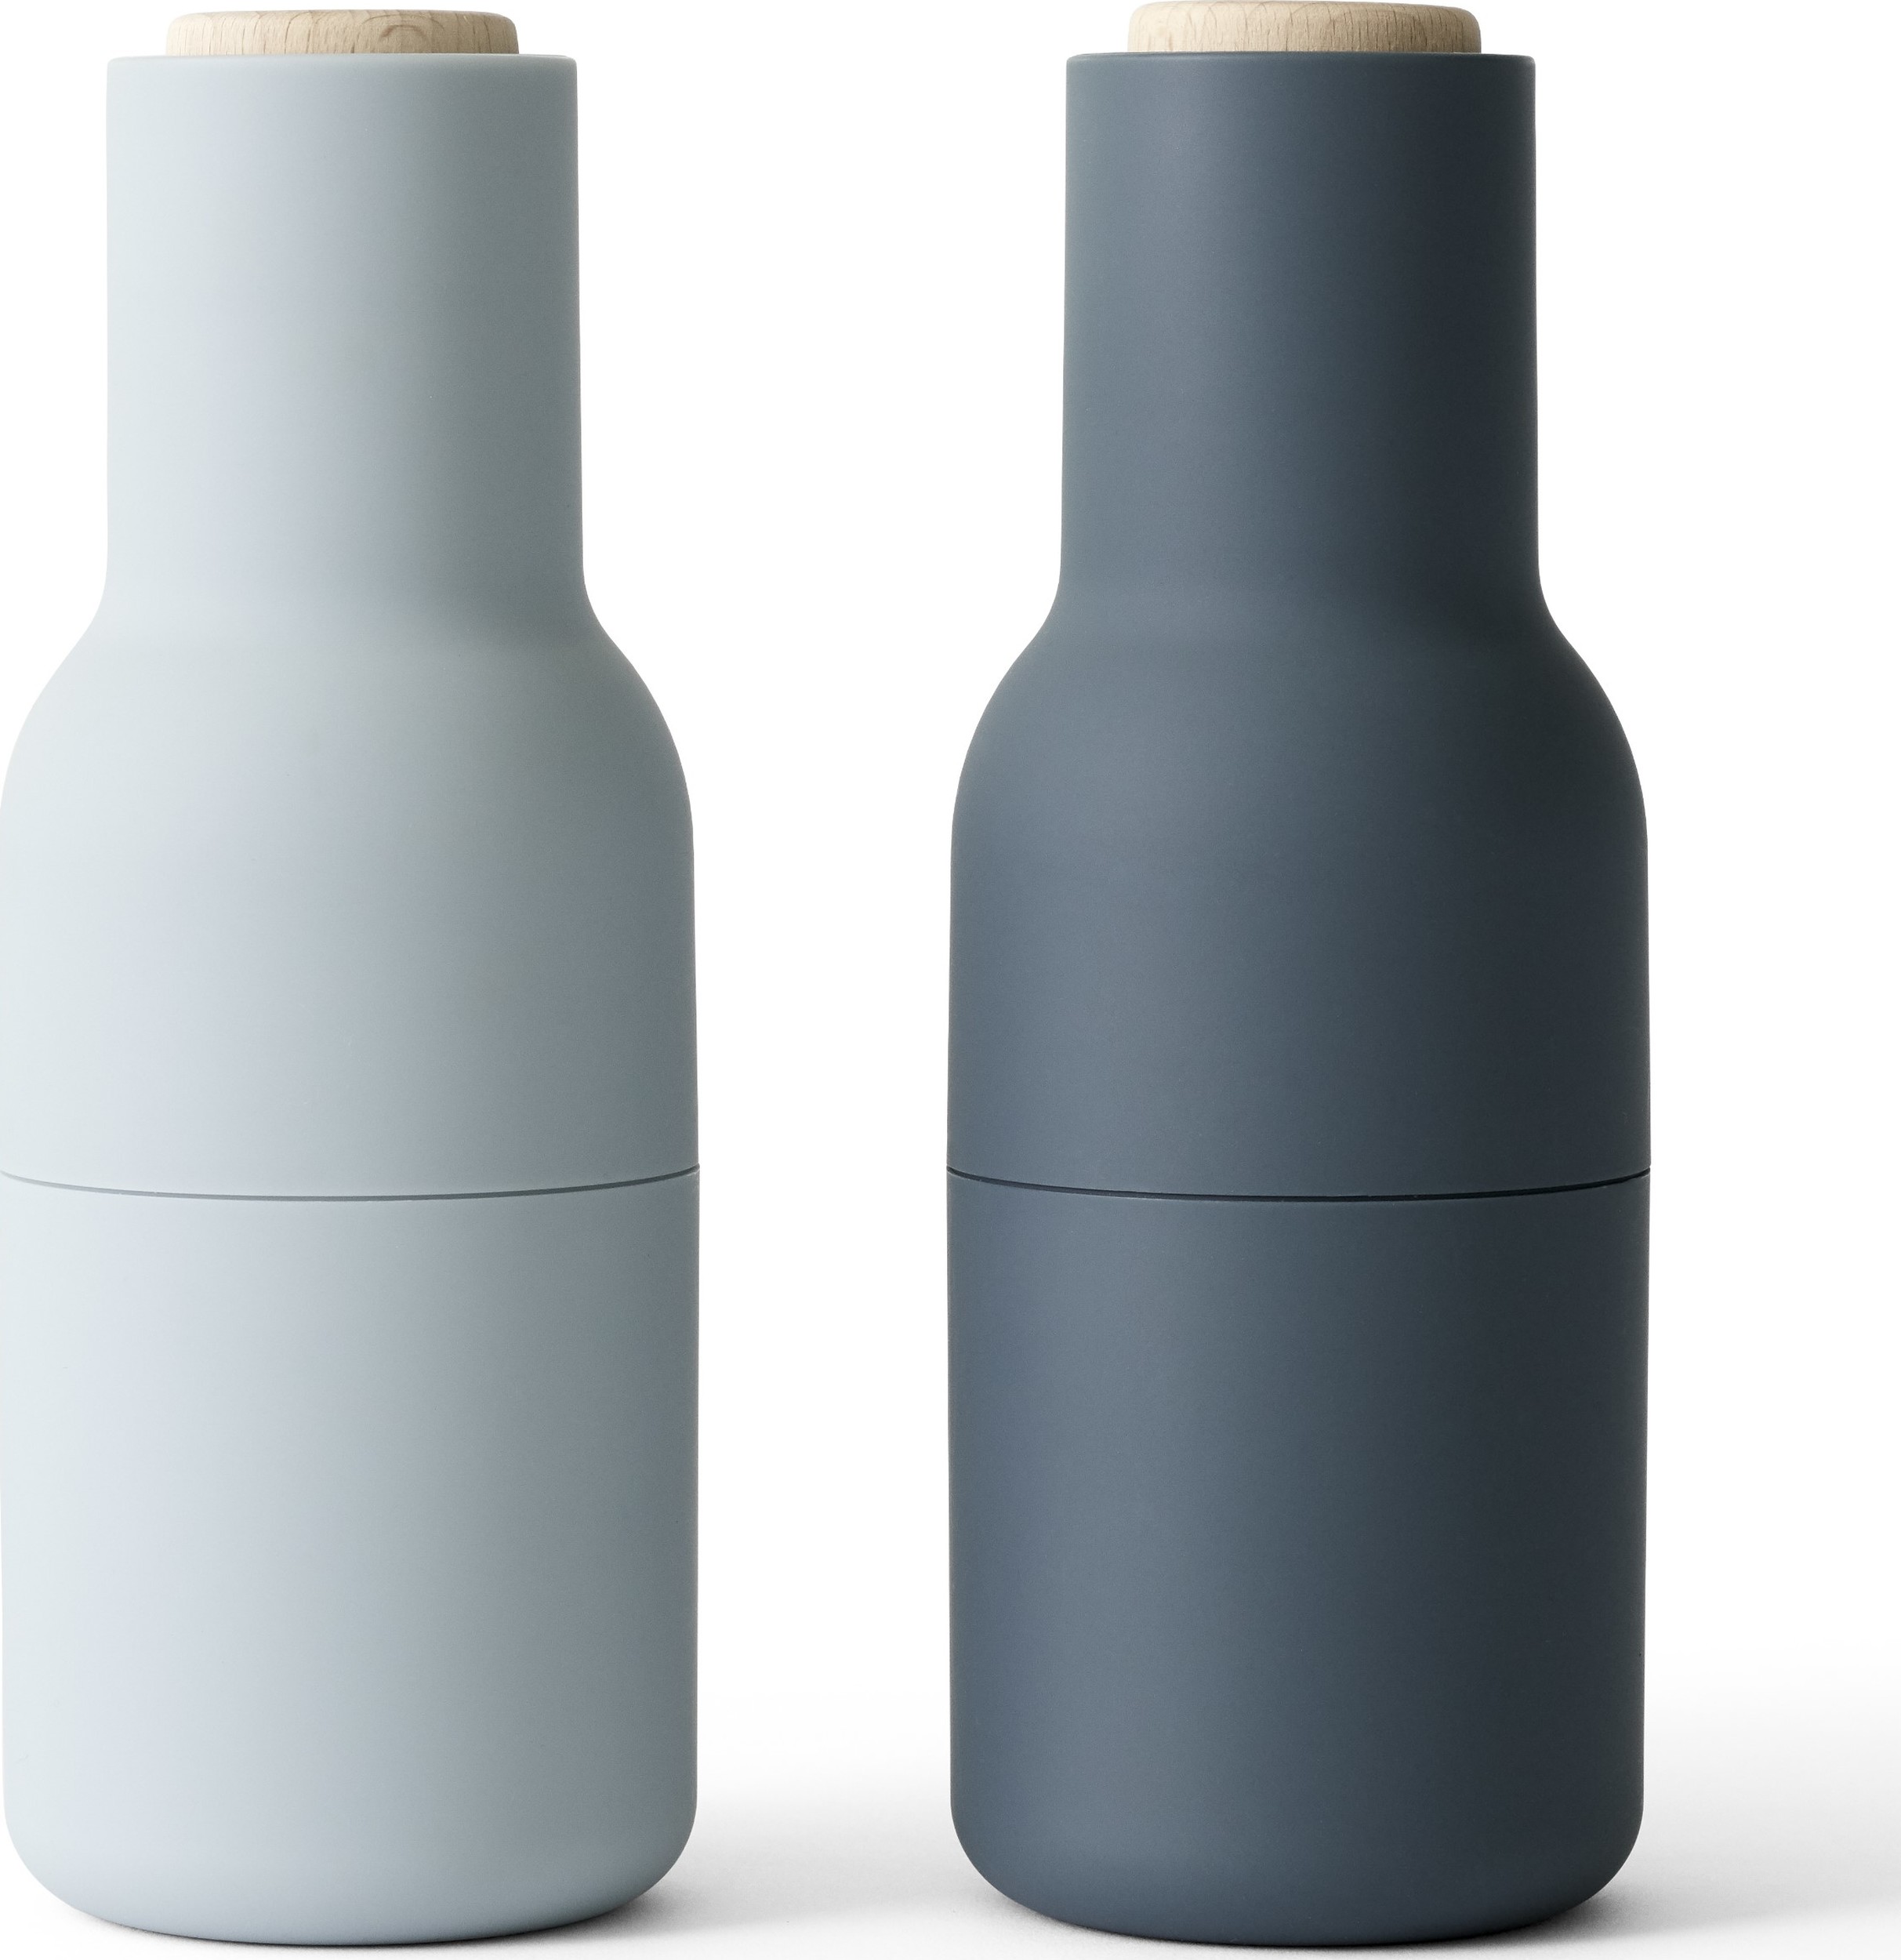 https://3fa-media.com/audo-copenhagen/audo-copenhagen-bottle-grinder-beech-pepper-salt-or-spice-grinders-blue-2-pcs__104247_1415b10-s2500x2500.jpg